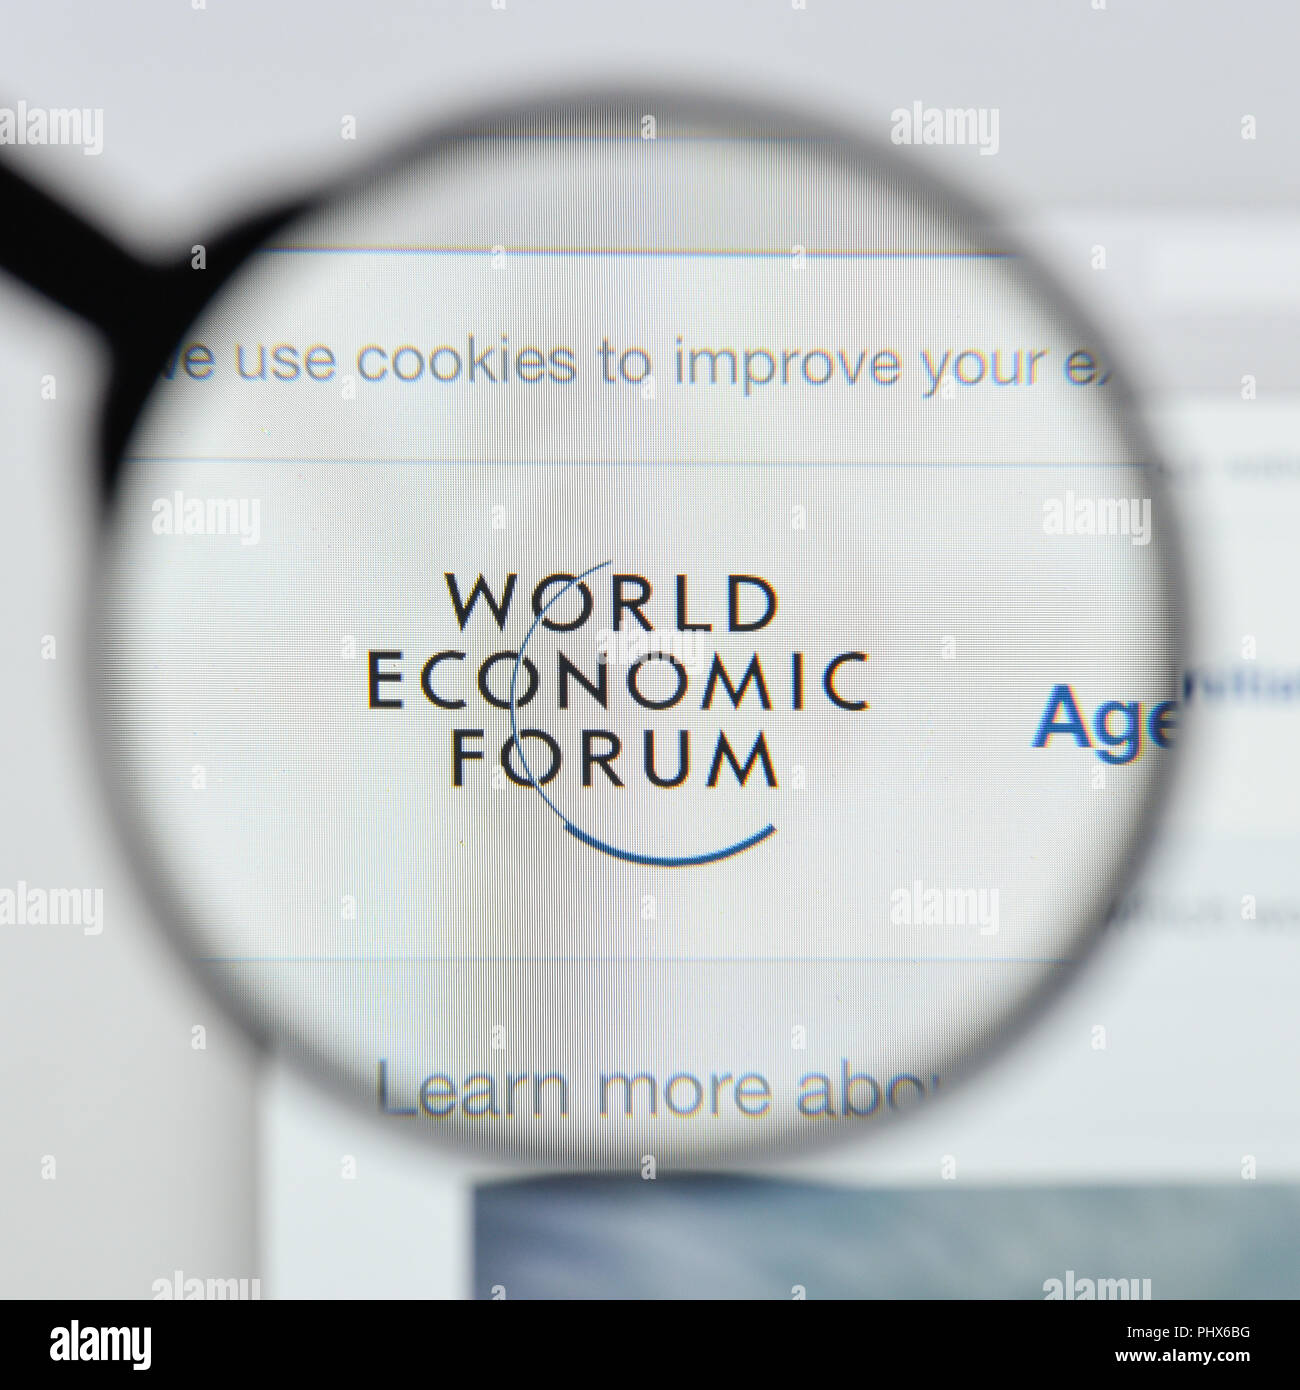 Milan, Italy - August 20, 2018: world economic forum website homepage. world economic forum logo visible. Stock Photo